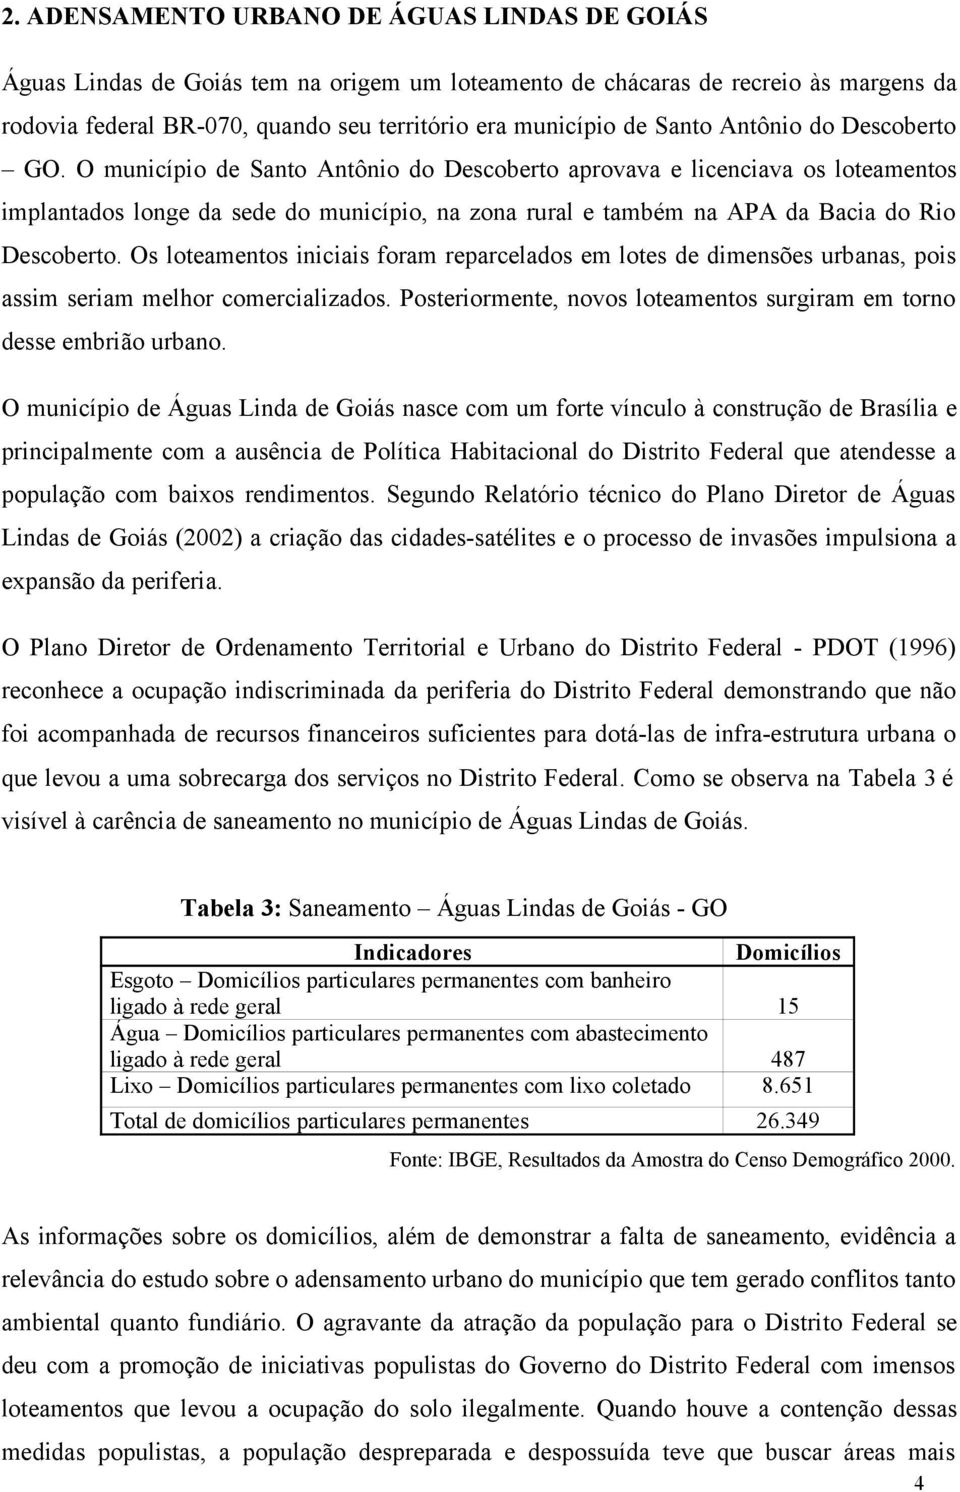 O município de Santo Antônio do Descoberto aprovava e licenciava os loteamentos implantados longe da sede do município, na zona rural e também na APA da Bacia do Rio Descoberto.